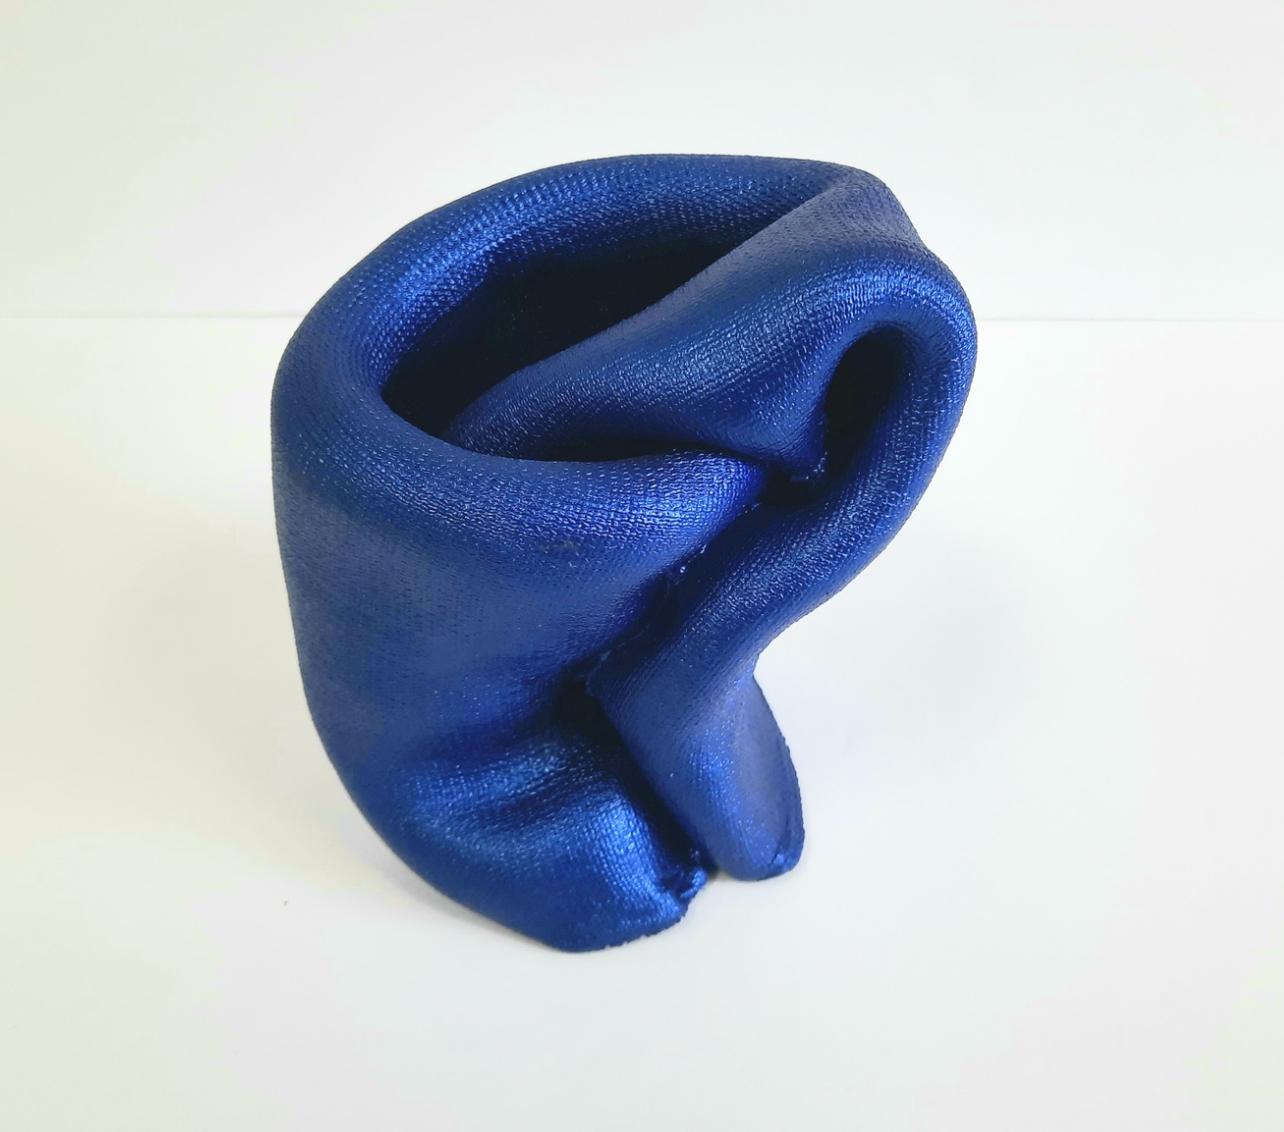 Sinuosity mini in Dark Blue  (pop slick metallic smooth small sculpture abstract